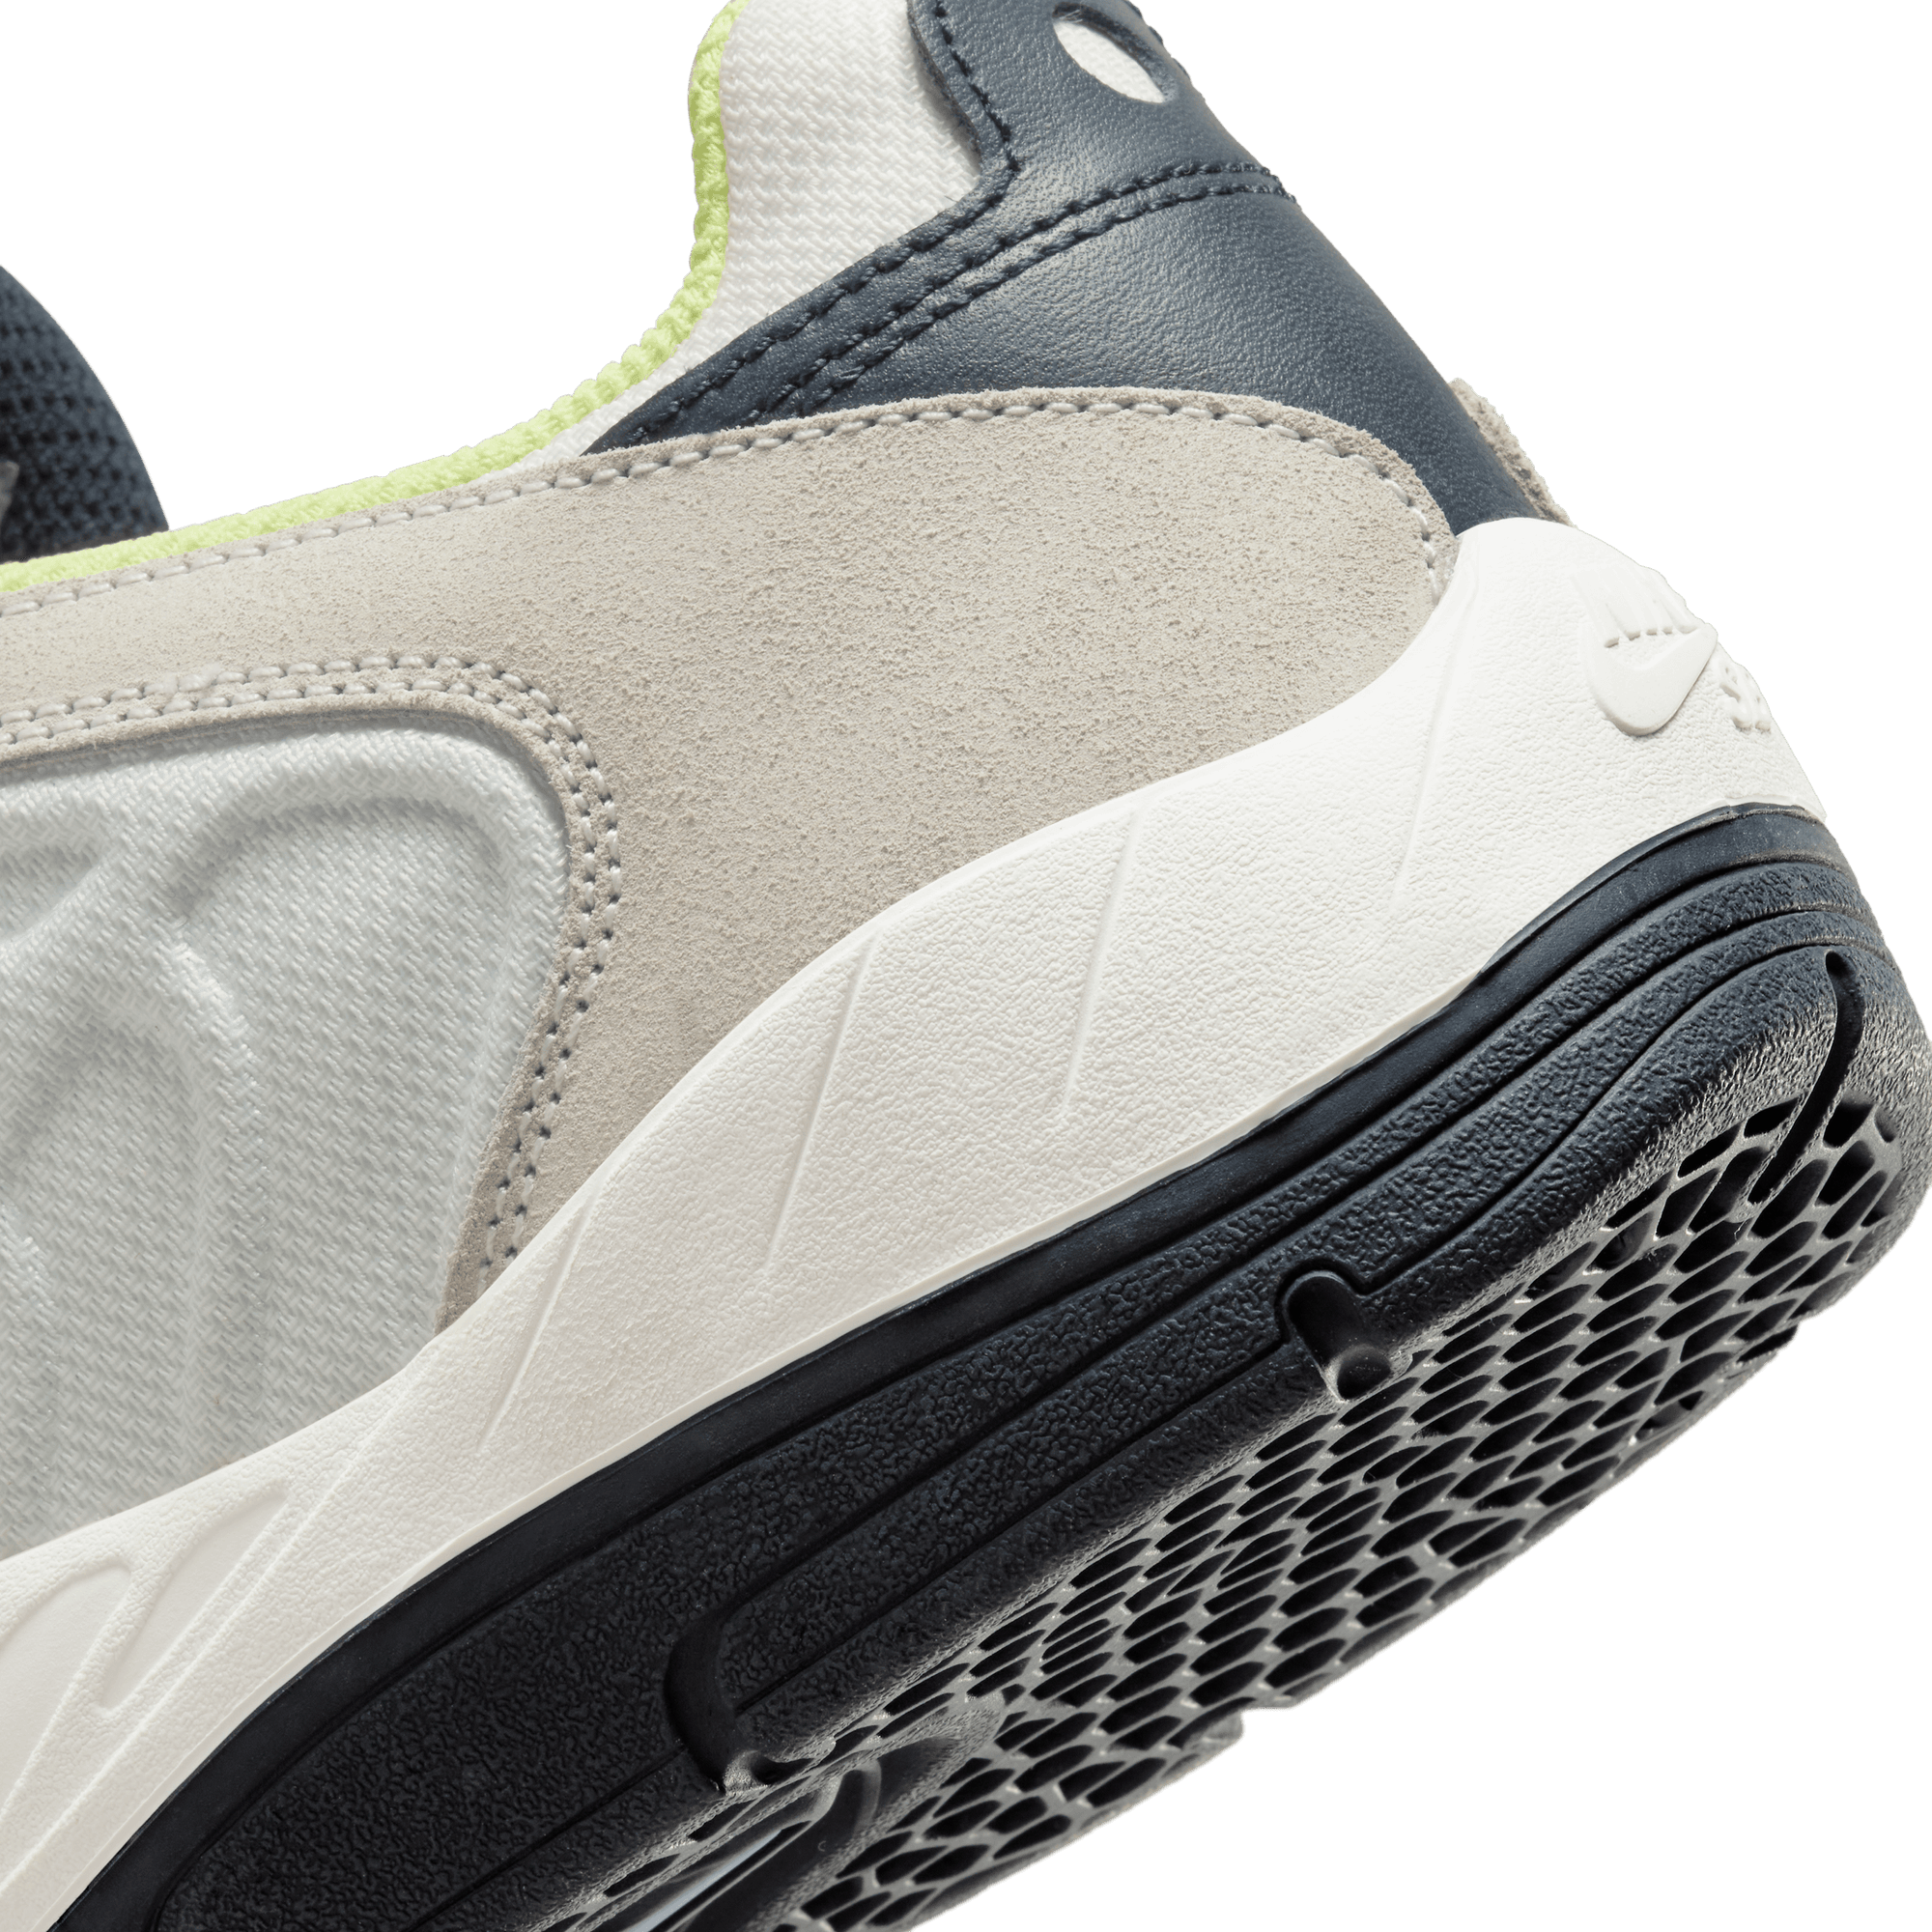 Summit White Vertebrae Nike SB Skate Shoe Detail